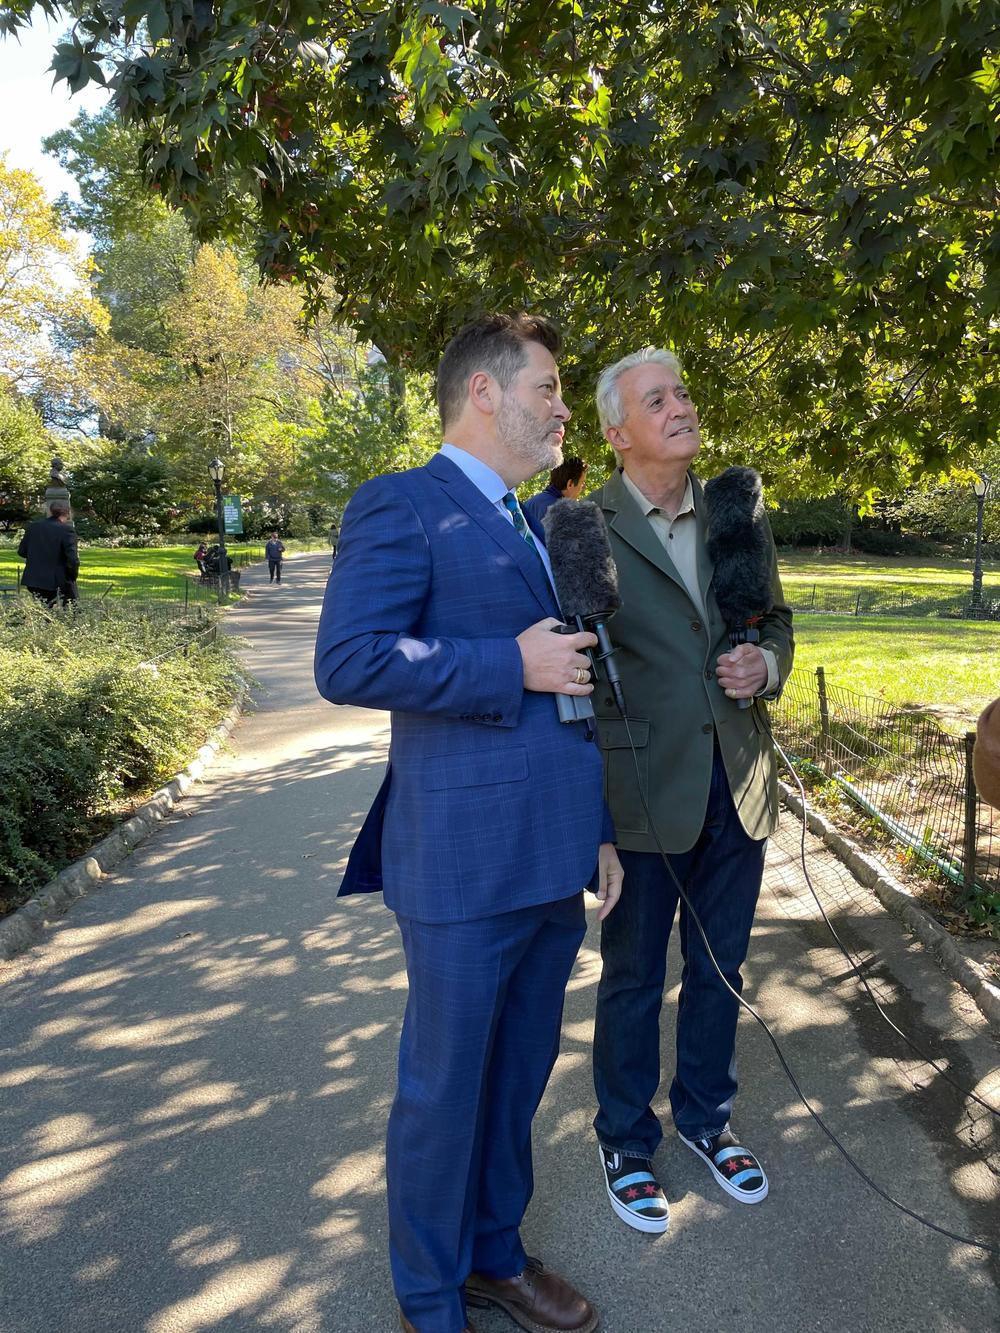 Nick Offerman and NPR's Scott Simon visit New York City's Central Park. 